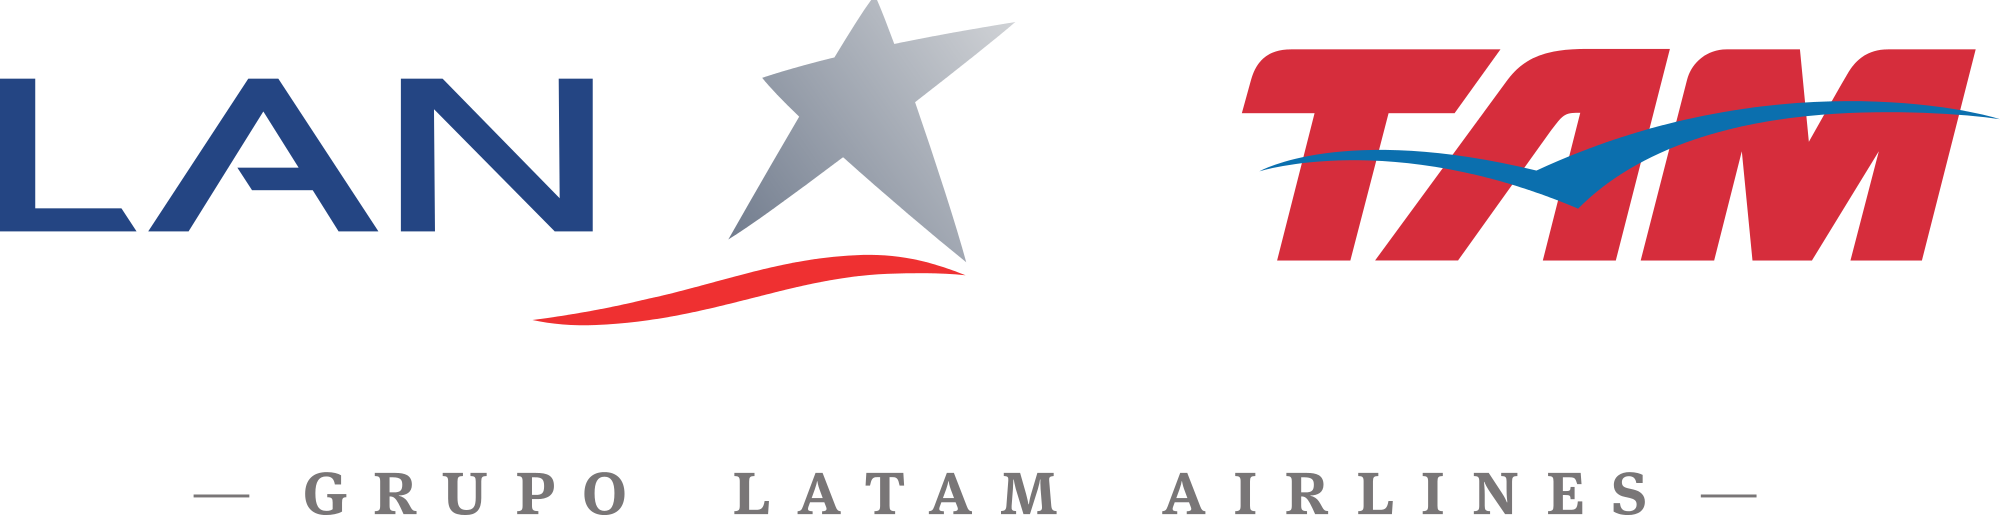 Latam airlines group Logo Vec